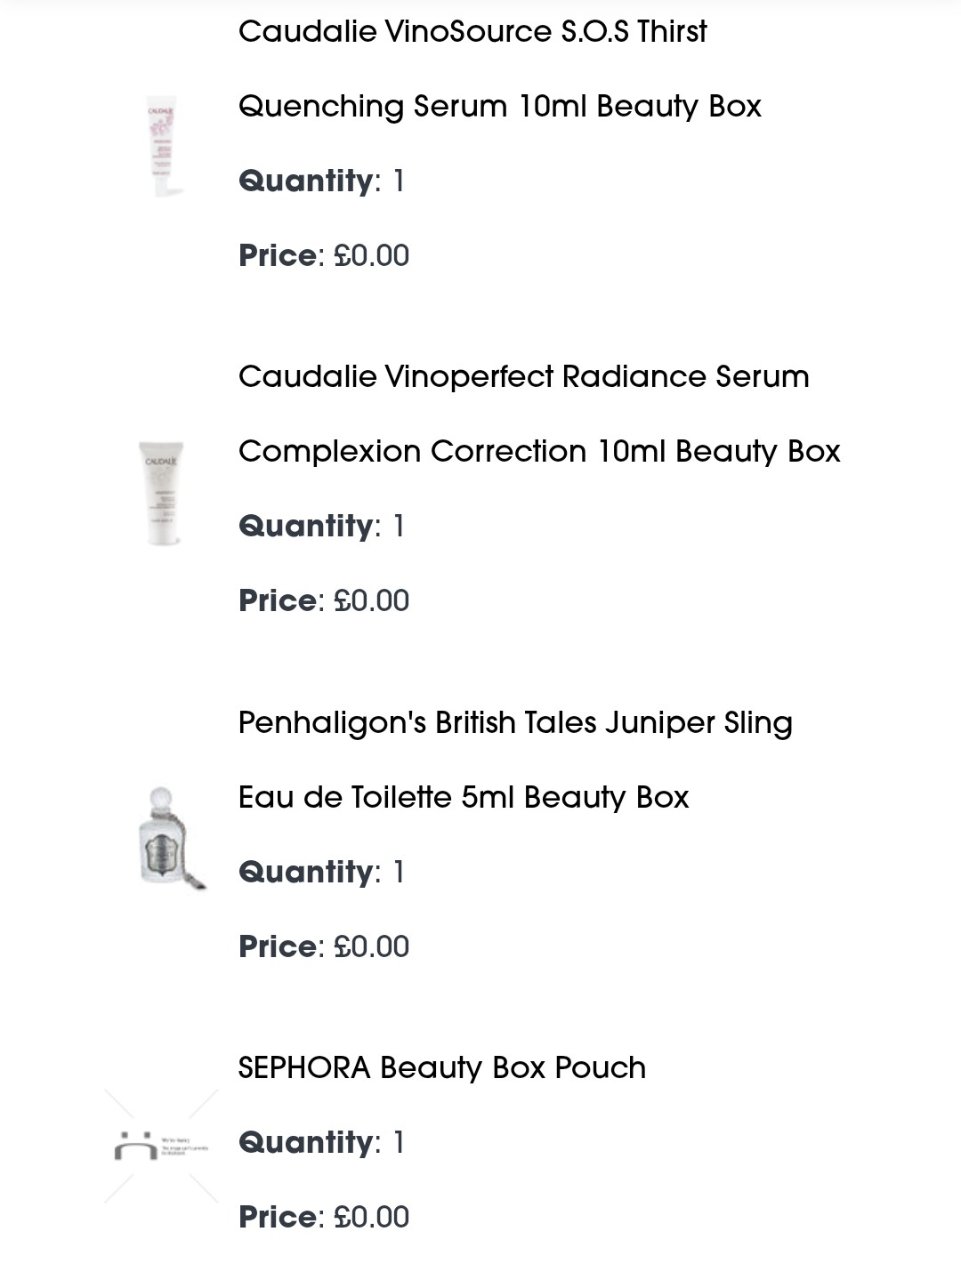 Sephora beauty box